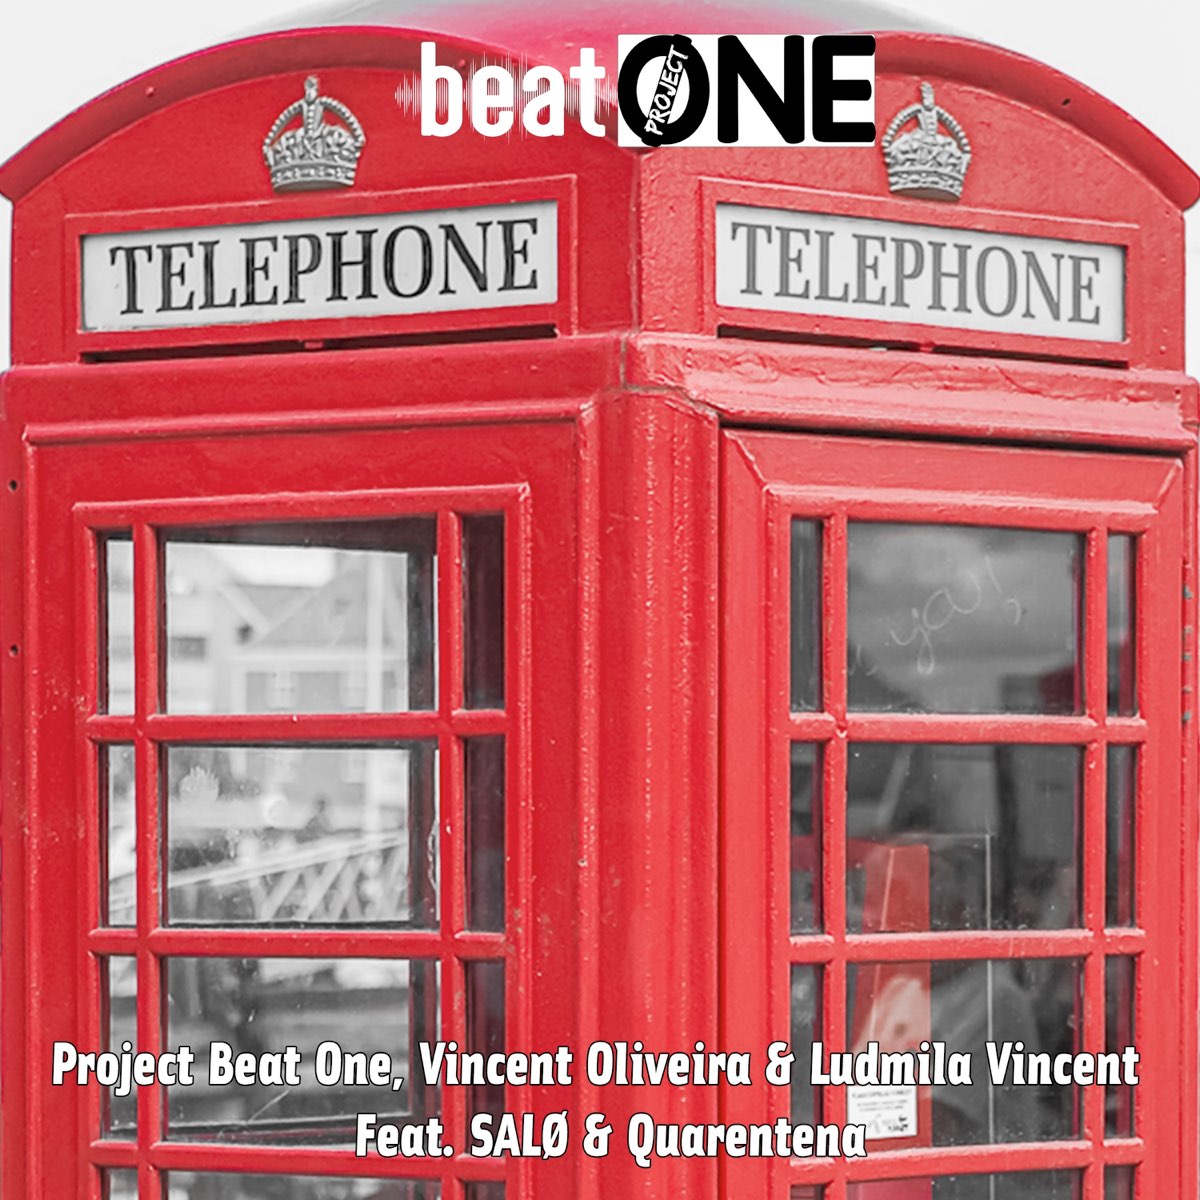 Project beats. Альбом для телефона. Dialing programs.